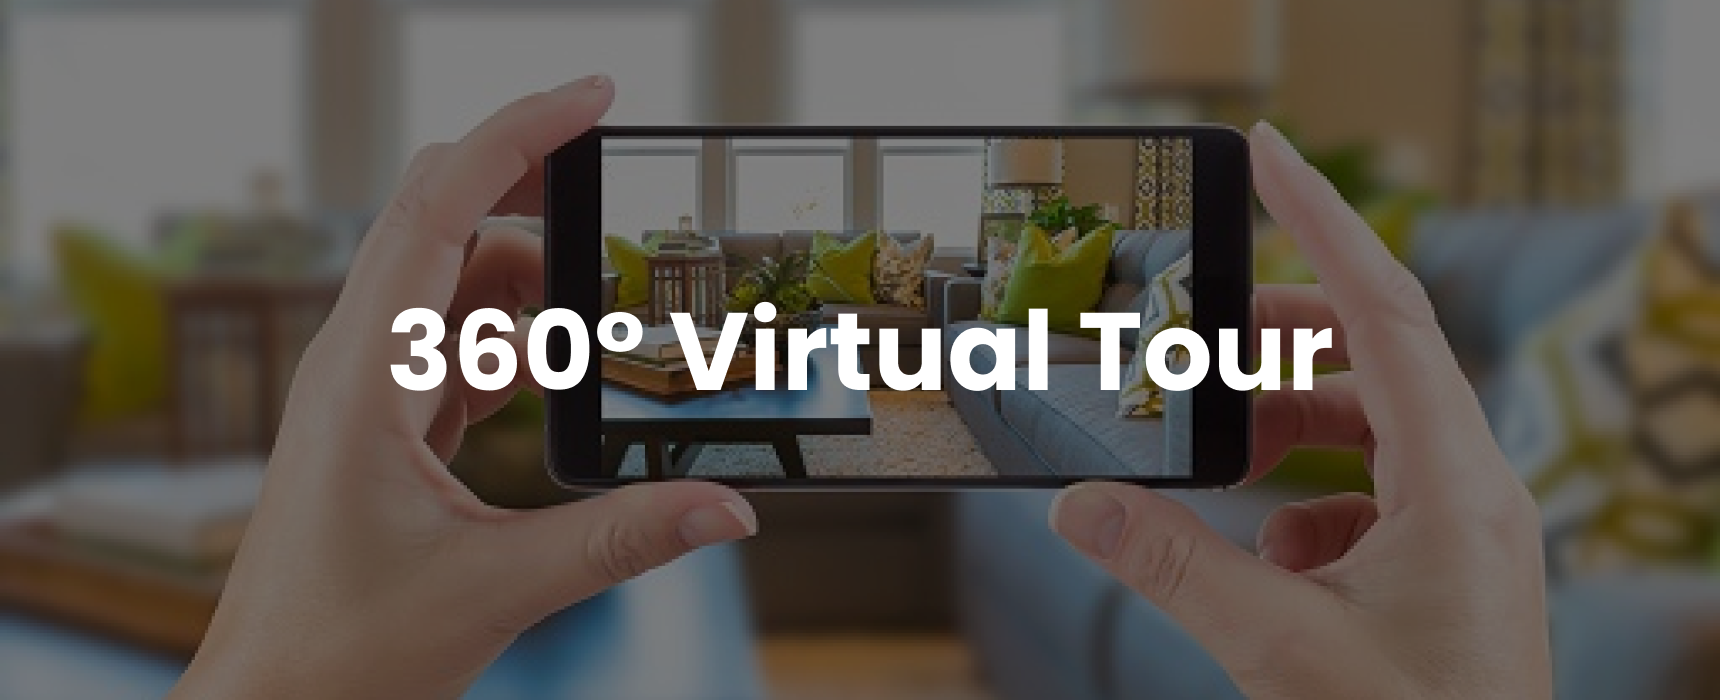 Real Estate App - Virtual Tour